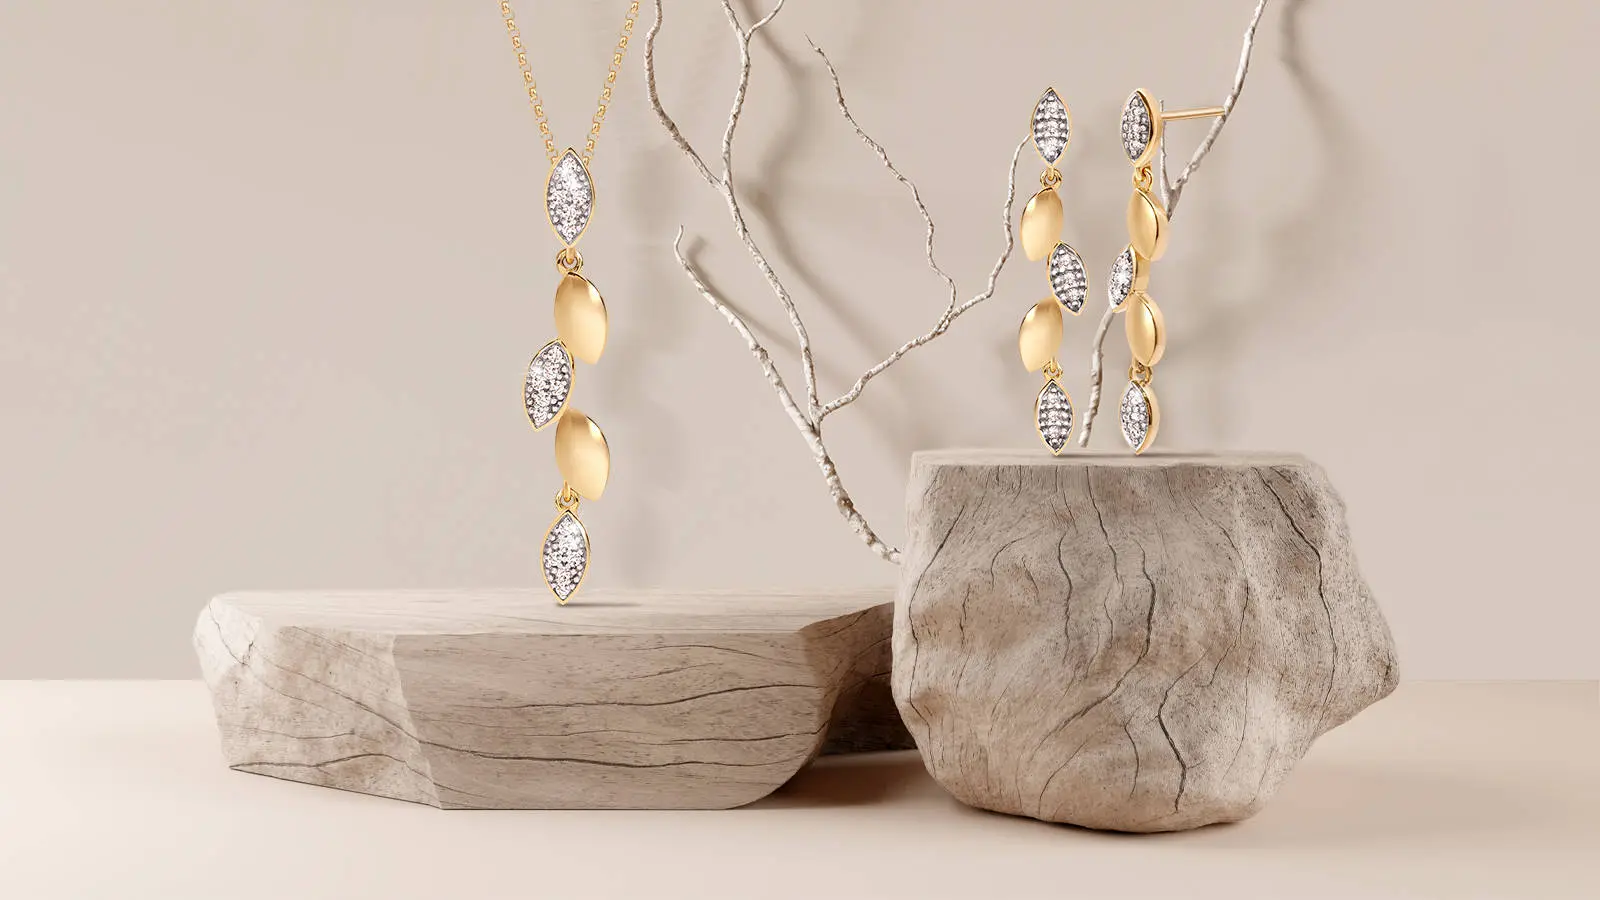 Bernhard H. Mayer 18K Gold Jewellery - Autumn Earrings and Pendant